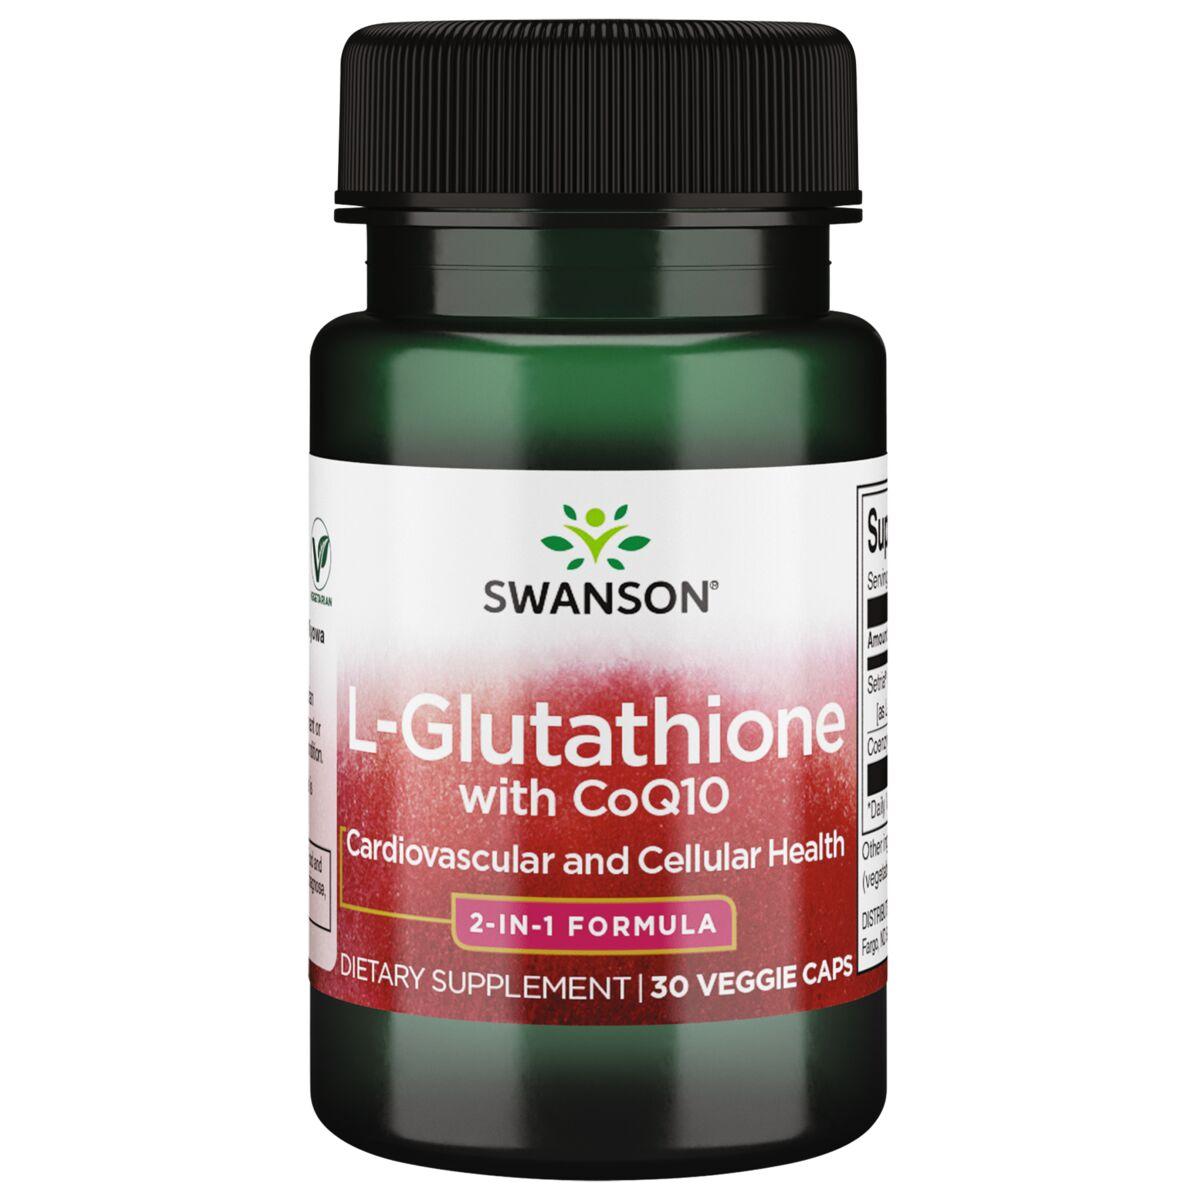 Swanson Ultra L-Glutathione with Coq10 Supplement Vitamin | 30 Veg Caps